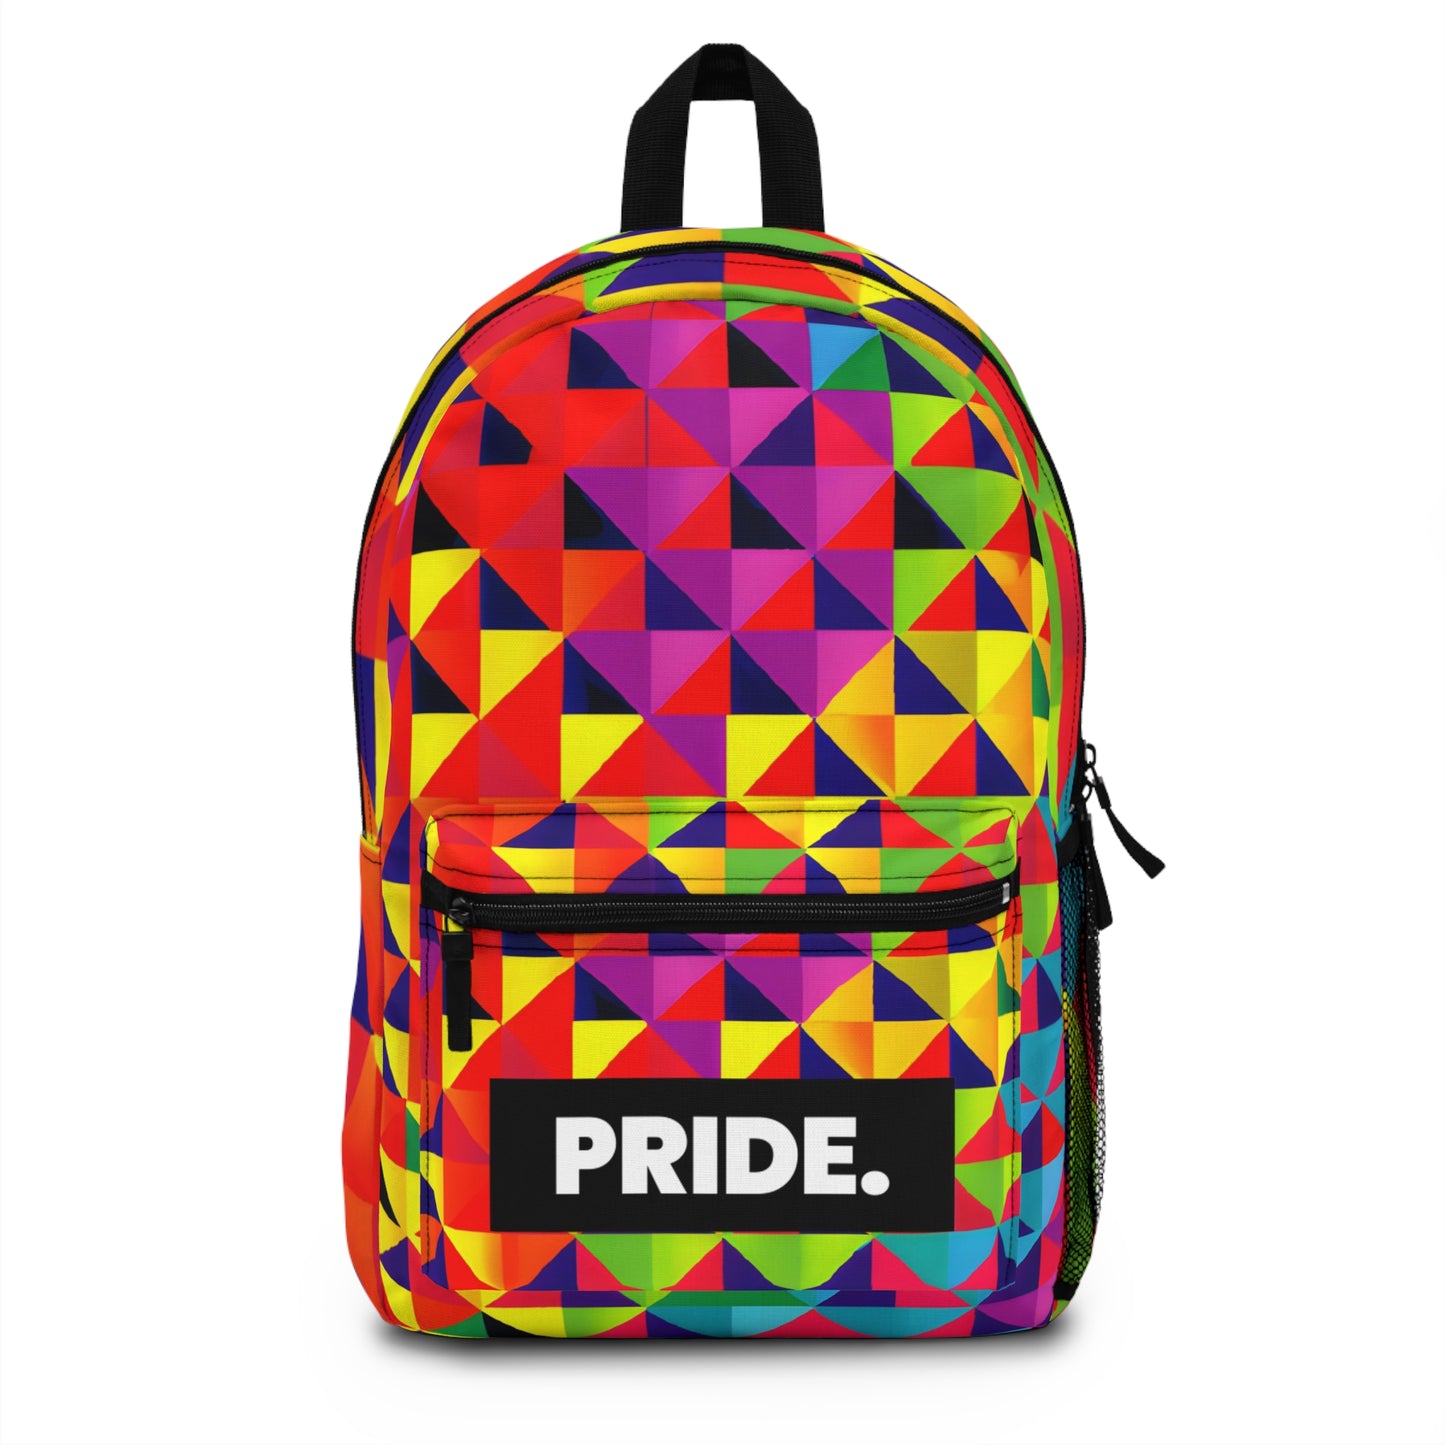 CrystalFantasia - Gay Pride Backpack